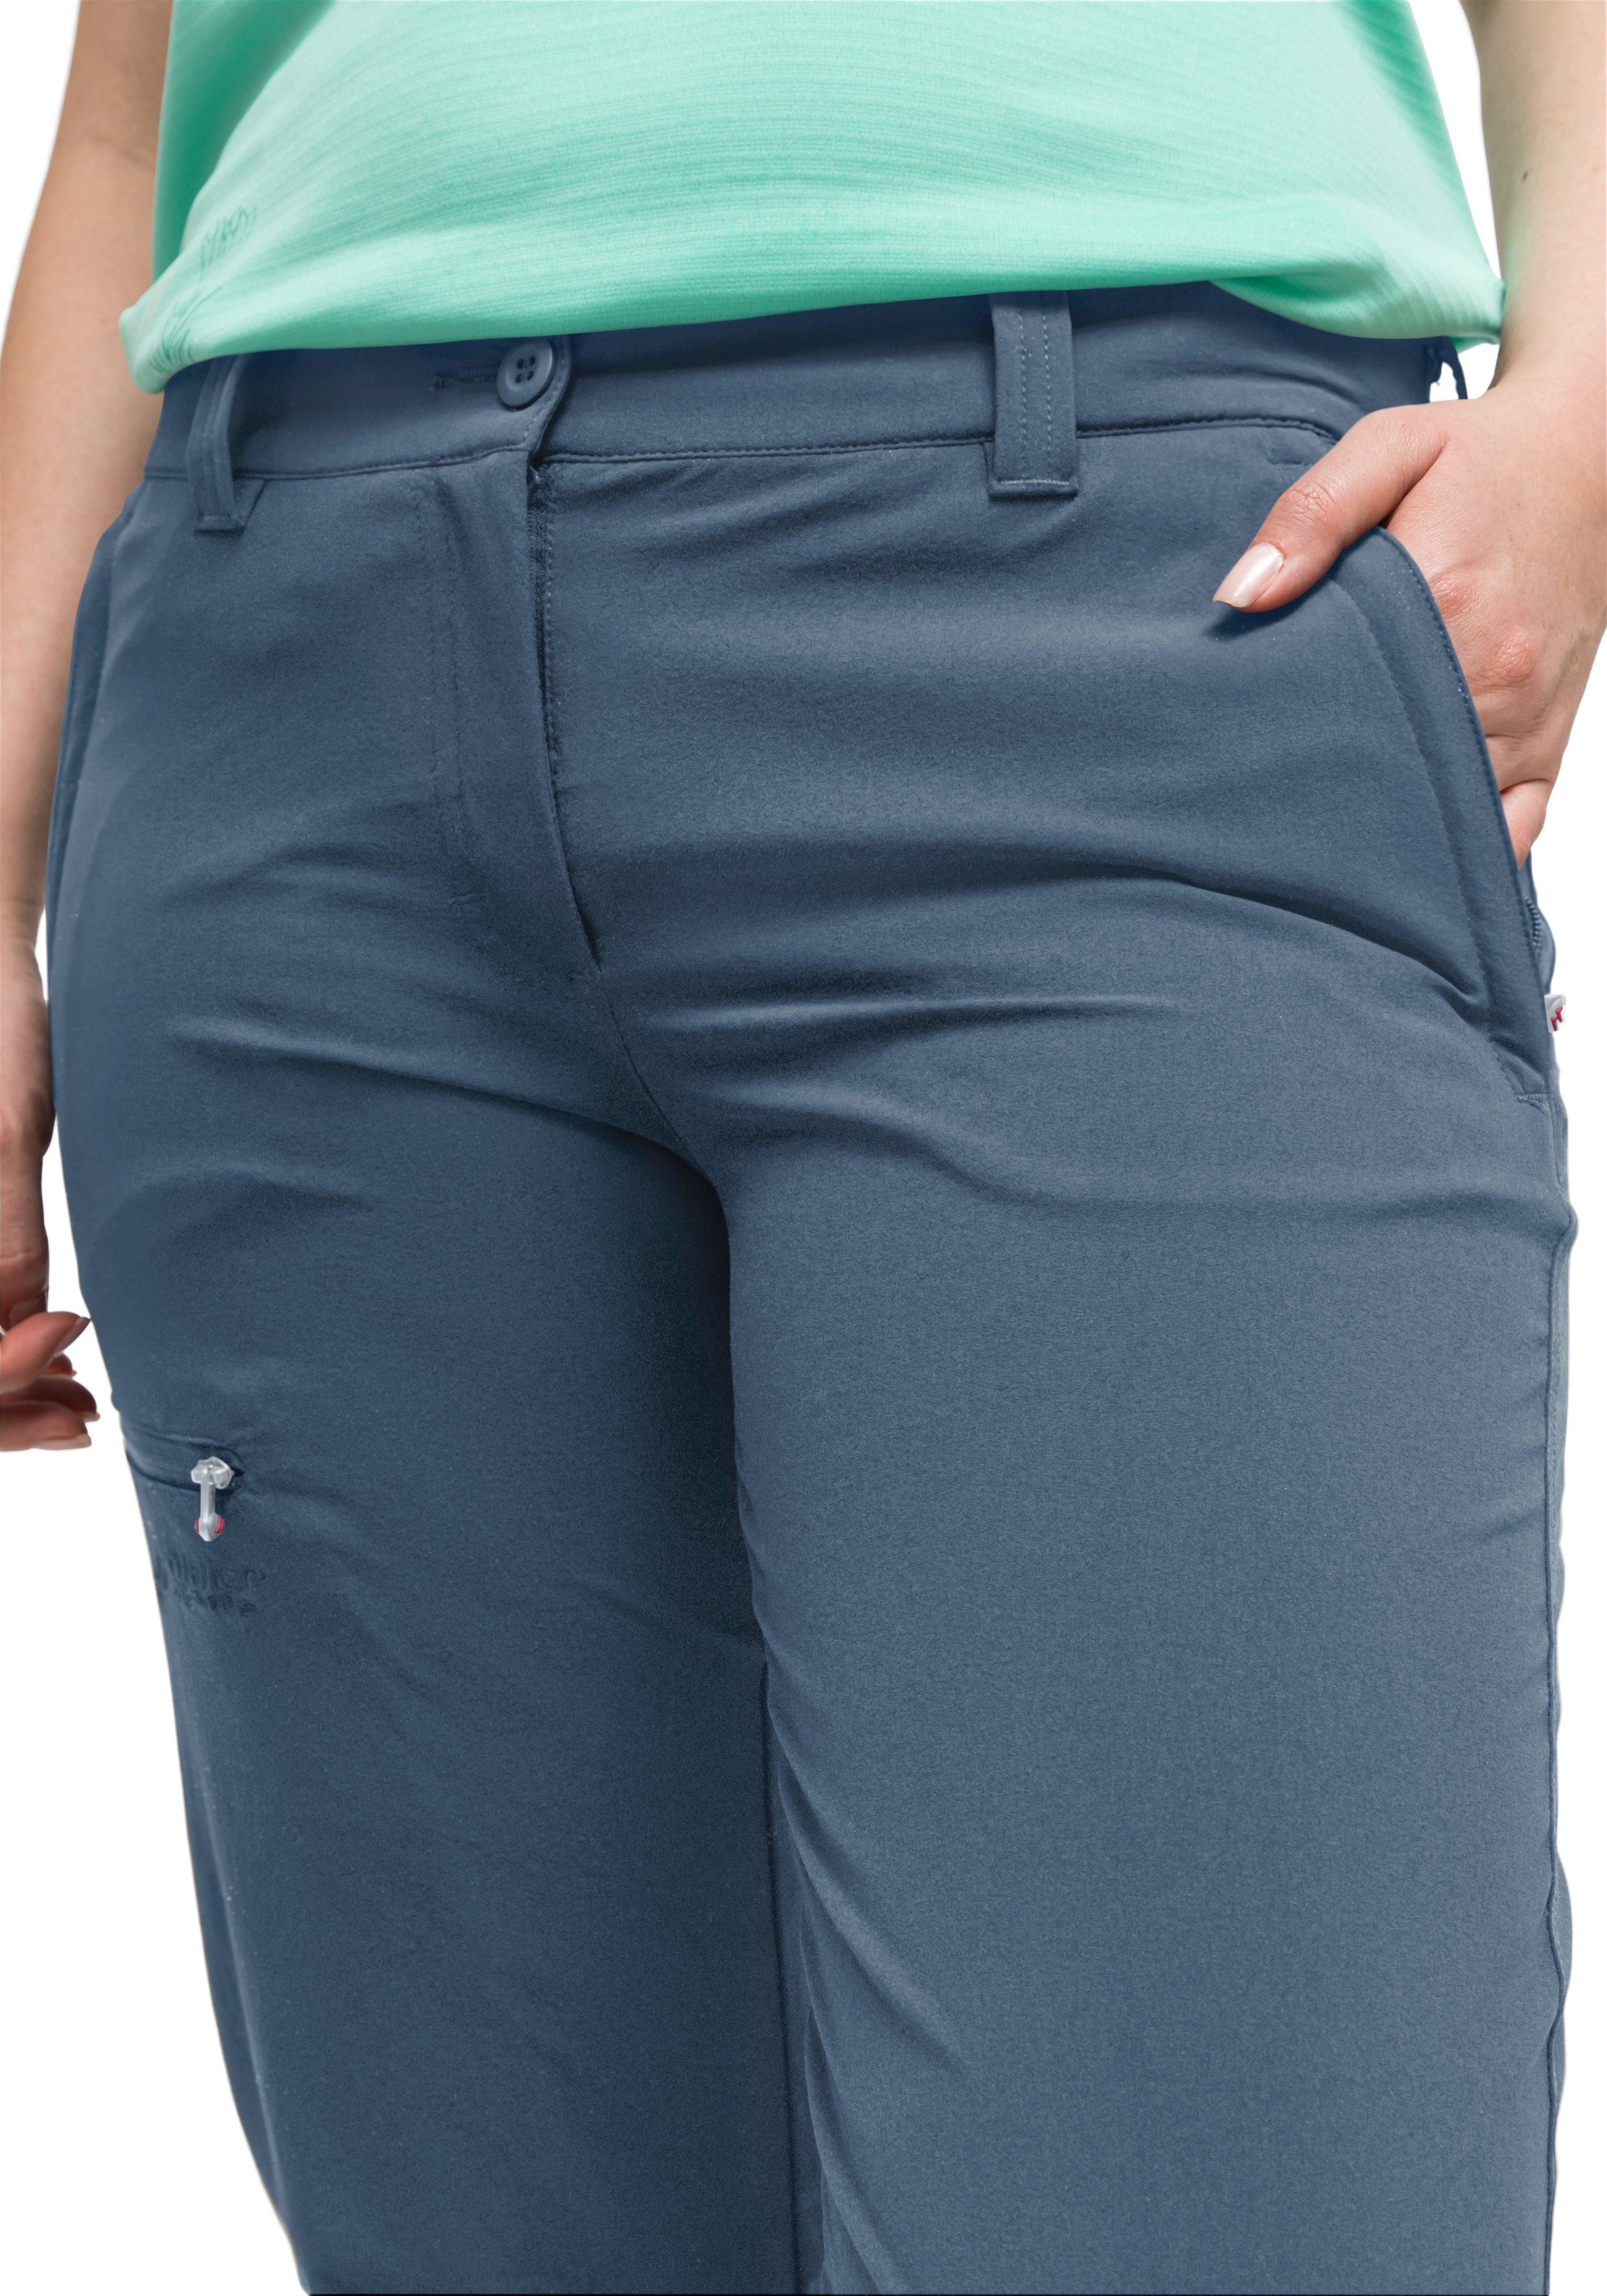 atmungsaktive Outdoor-Hose Funktionshose Damen jeansblau Wanderhose, Lulaka Maier 7/8 elastische Sports und